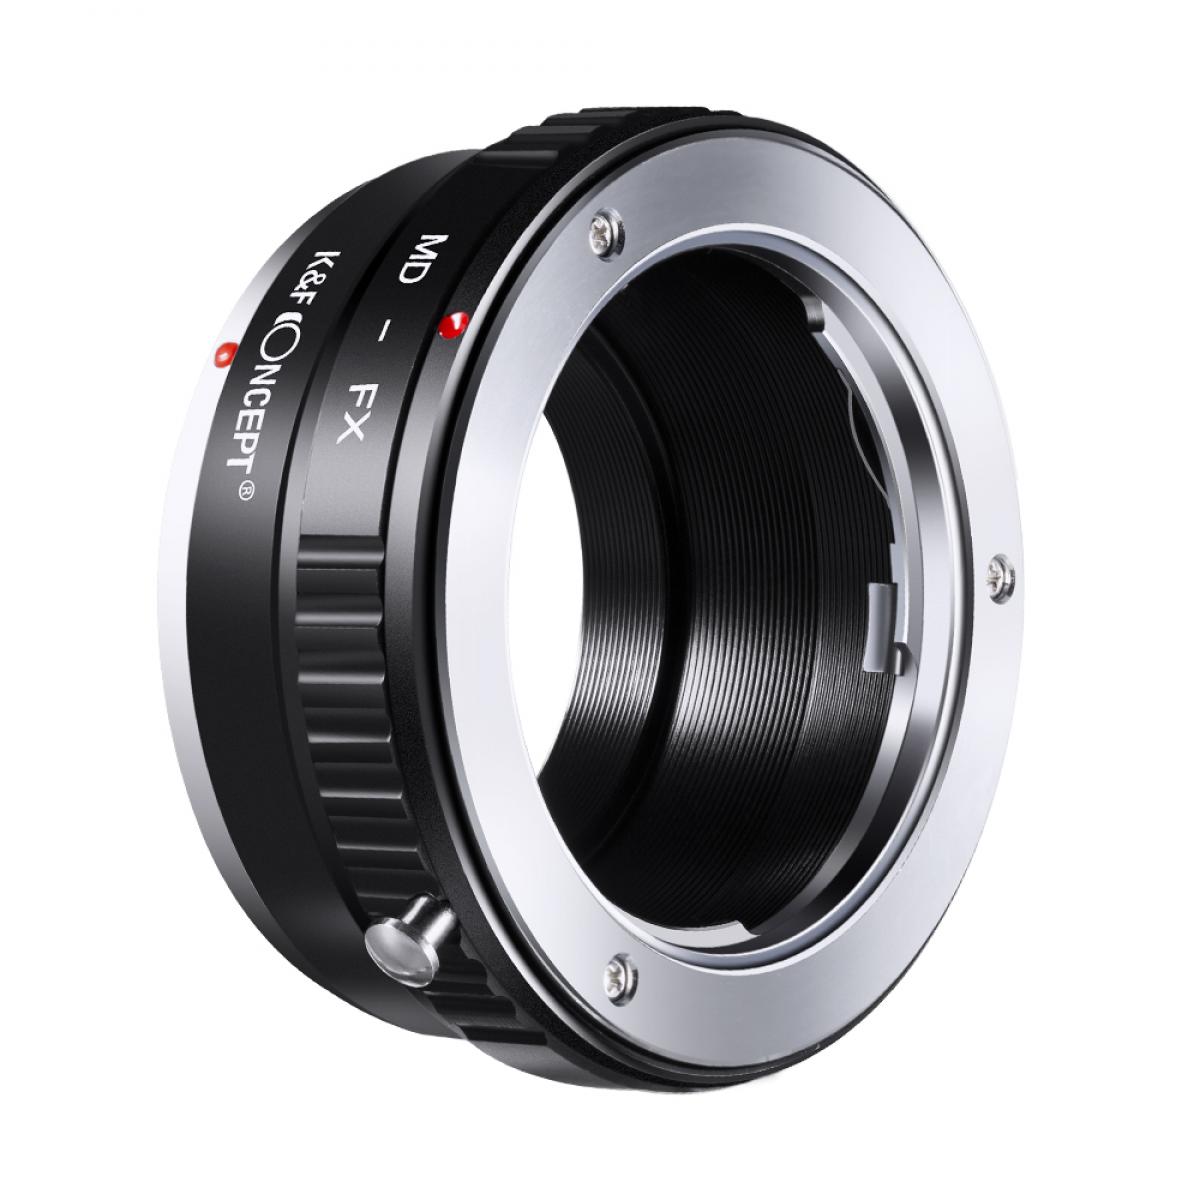 Lens Adapters for Fuji X Cameras